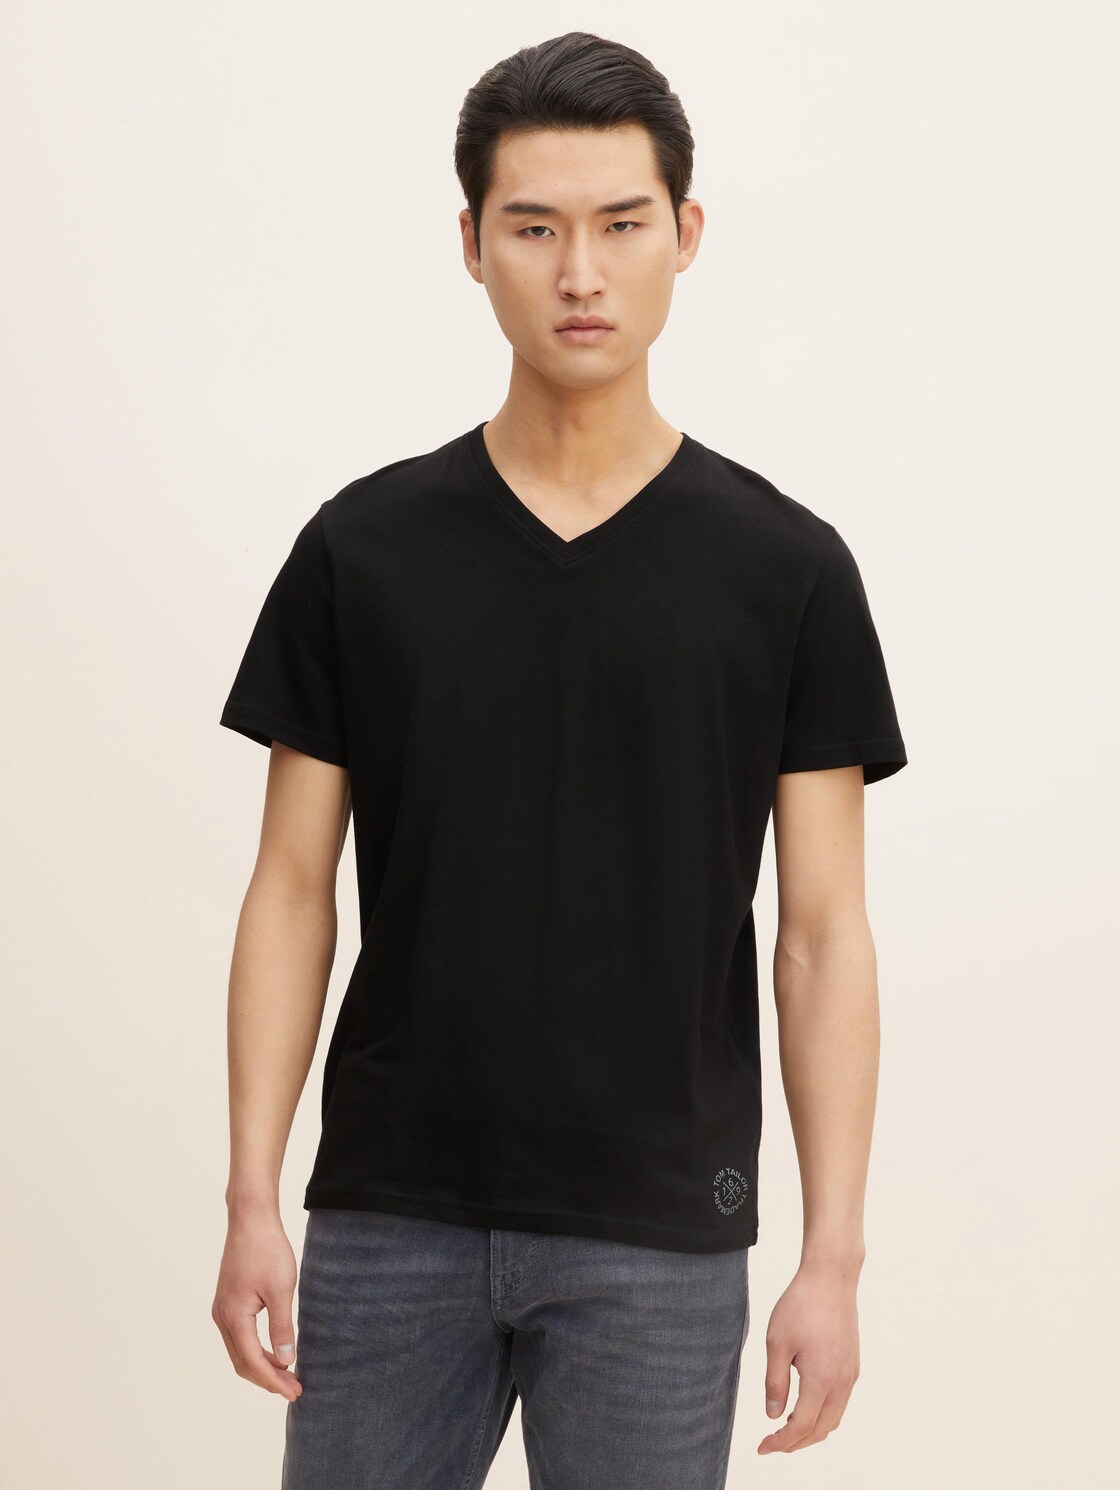 TOM TAILOR T-shirt in een dubbelverpakking, Mannen, zwart, Größe L